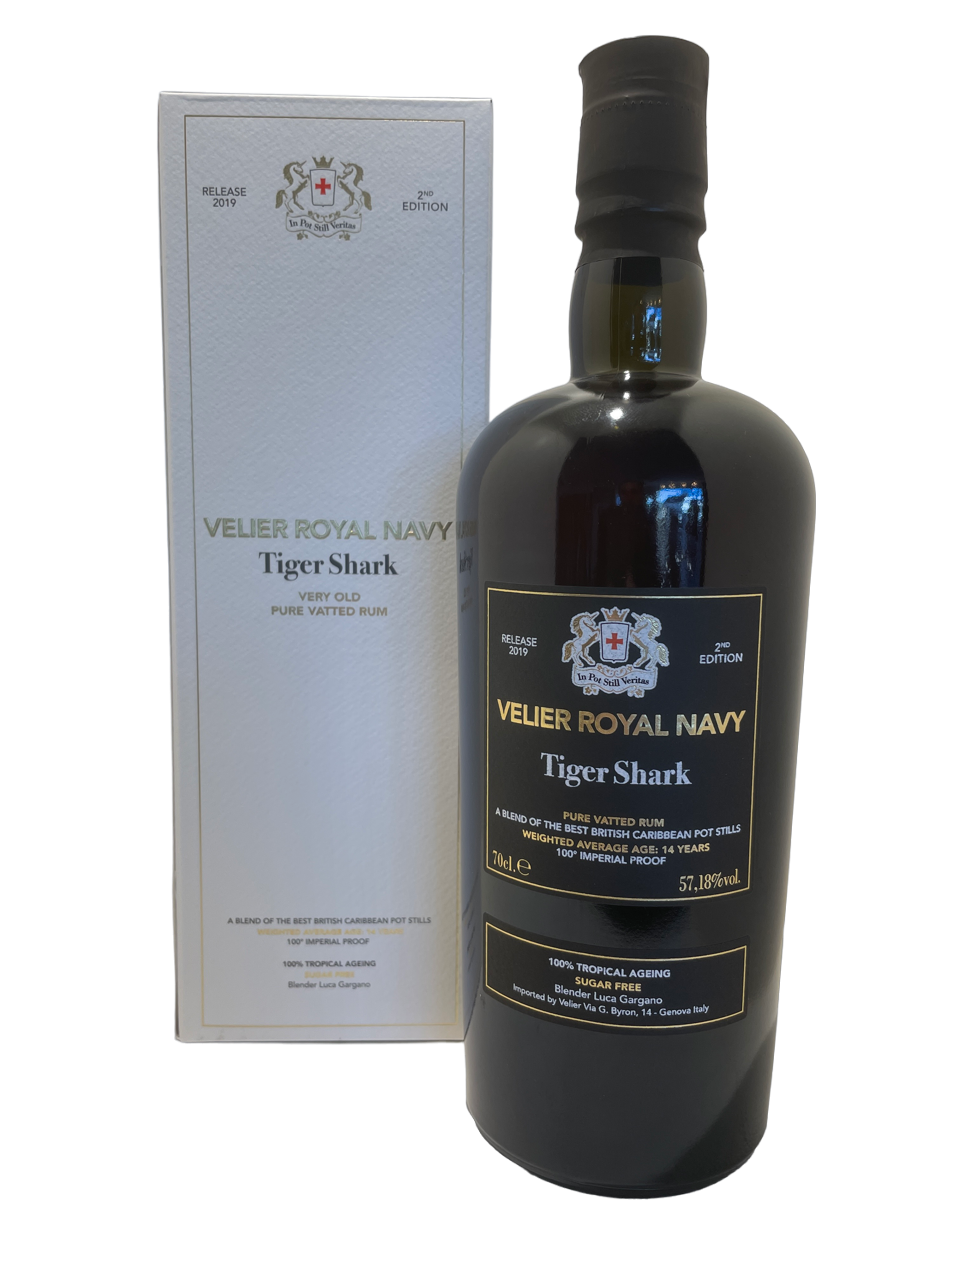 luca gargano rum rhum velier royal navy release 2019 2nd edition blend of the best british caribbean pot stills